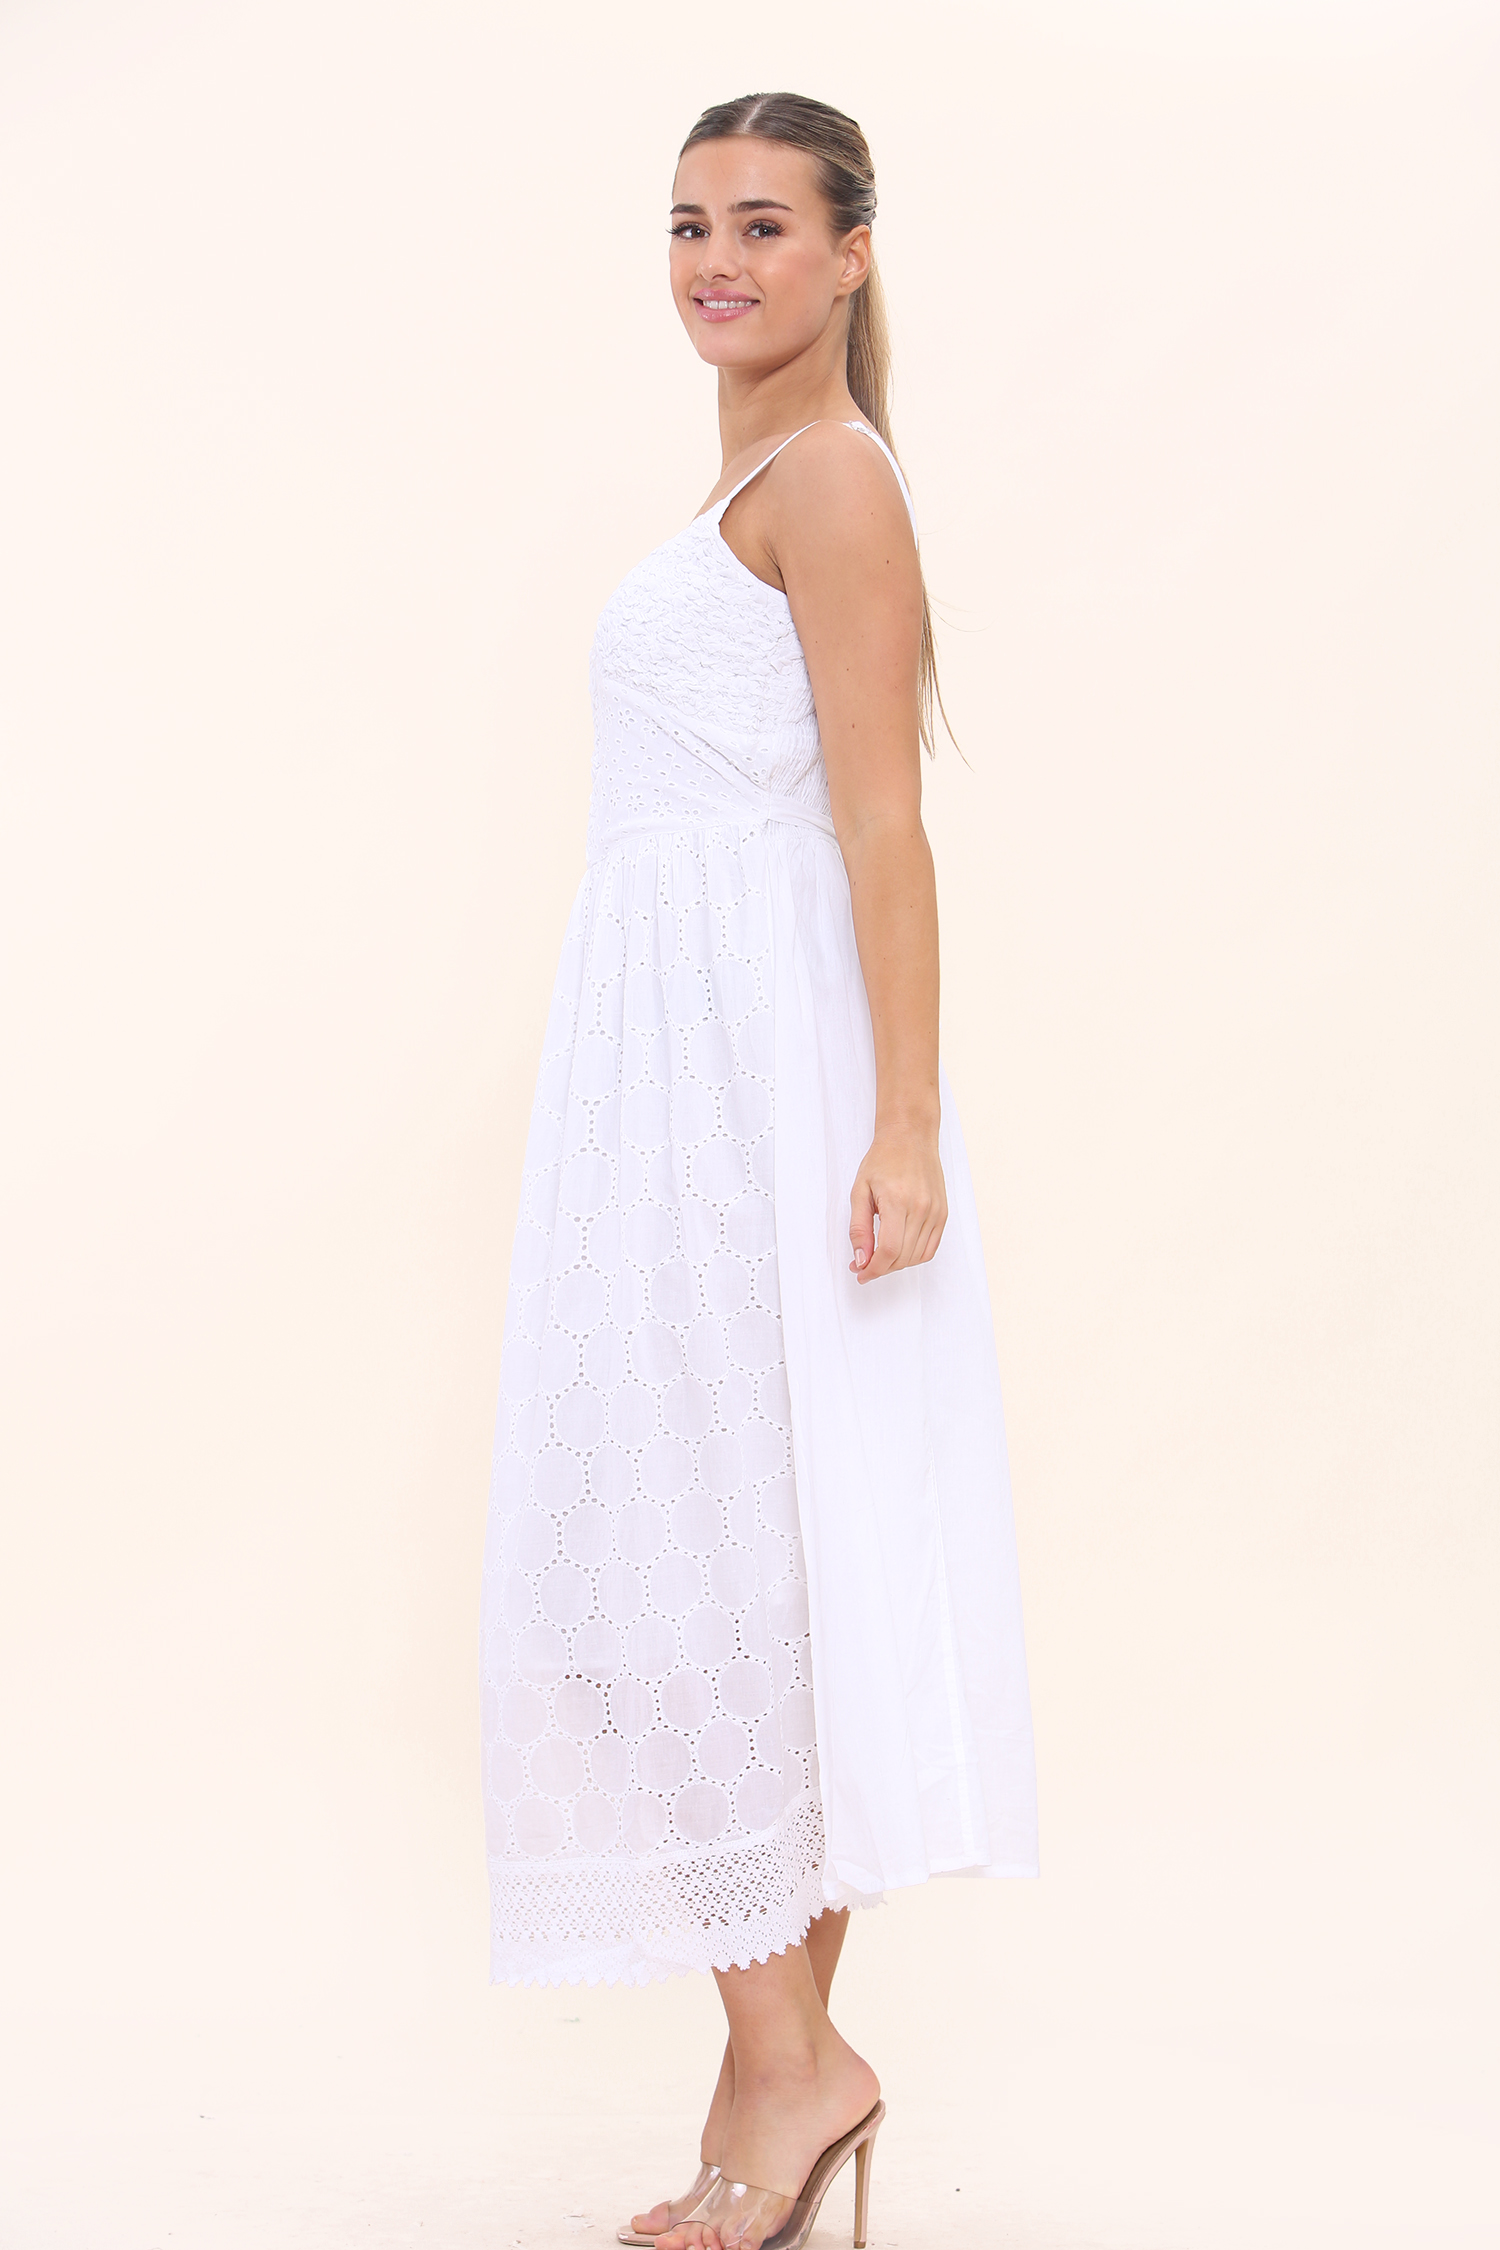 White Cotton Summer Beach Dress 48 pcs # 6103